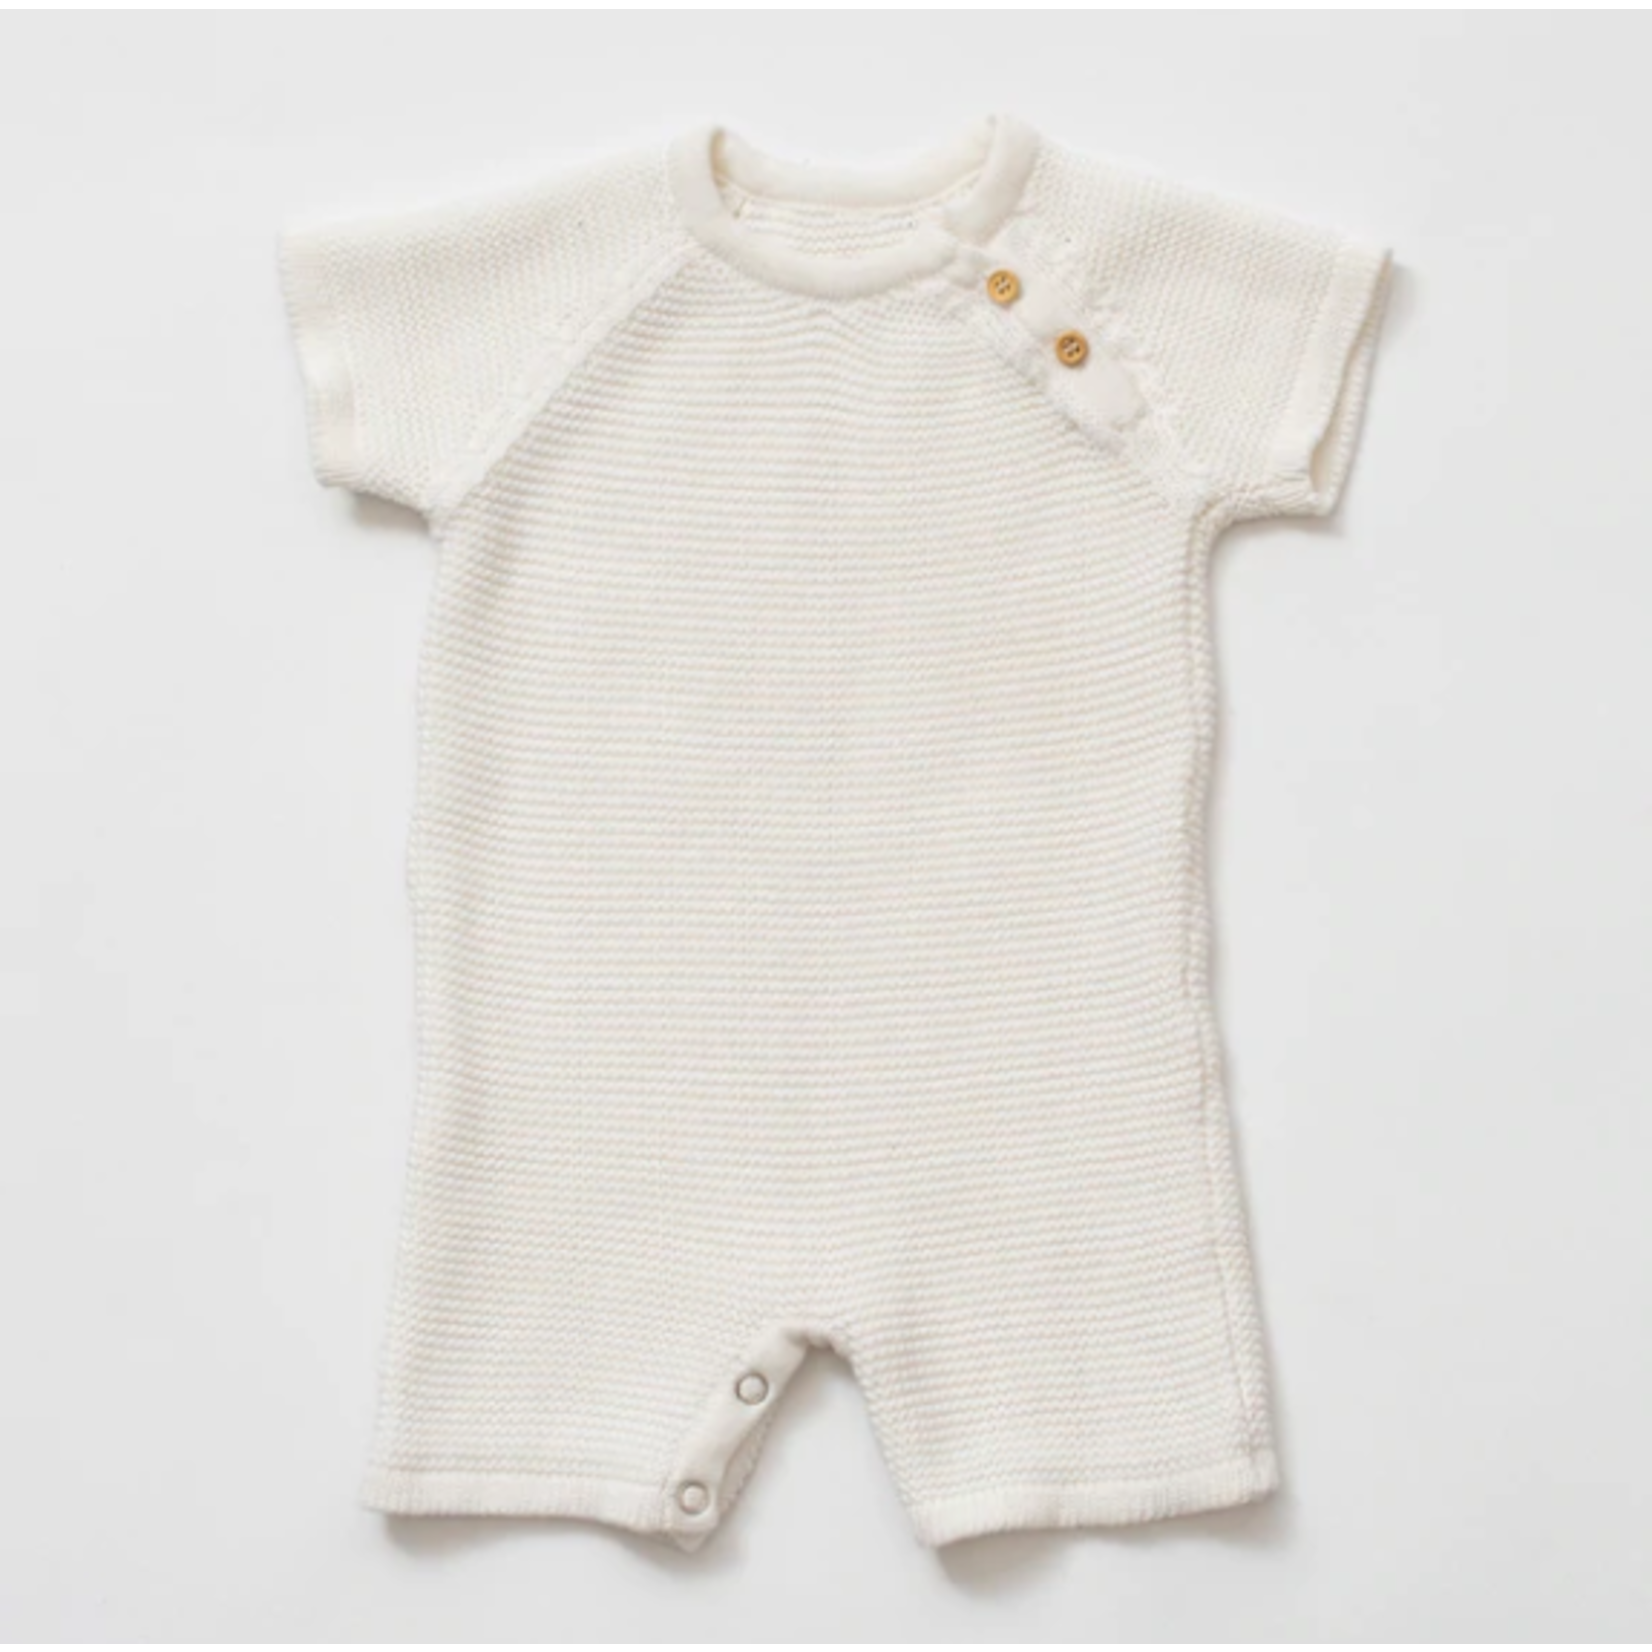 Zestt Organics Knit Baby Romper White